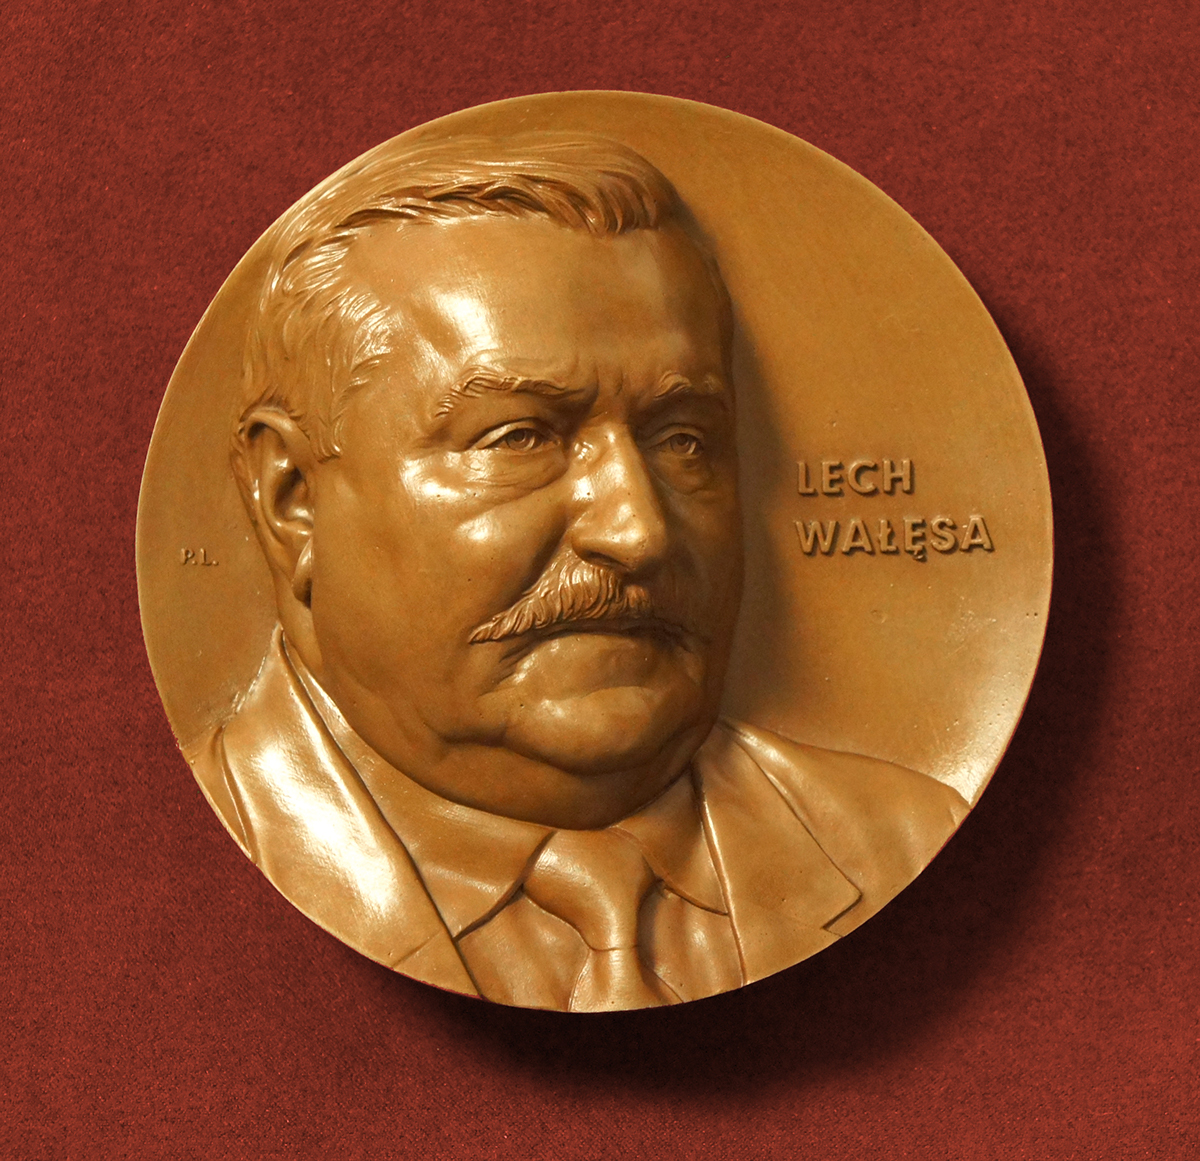 Piotr Lesniak Medal Lech Wałęsa Lech Walesa Portret rzeźba sculpture portrait illustratio ilustracja